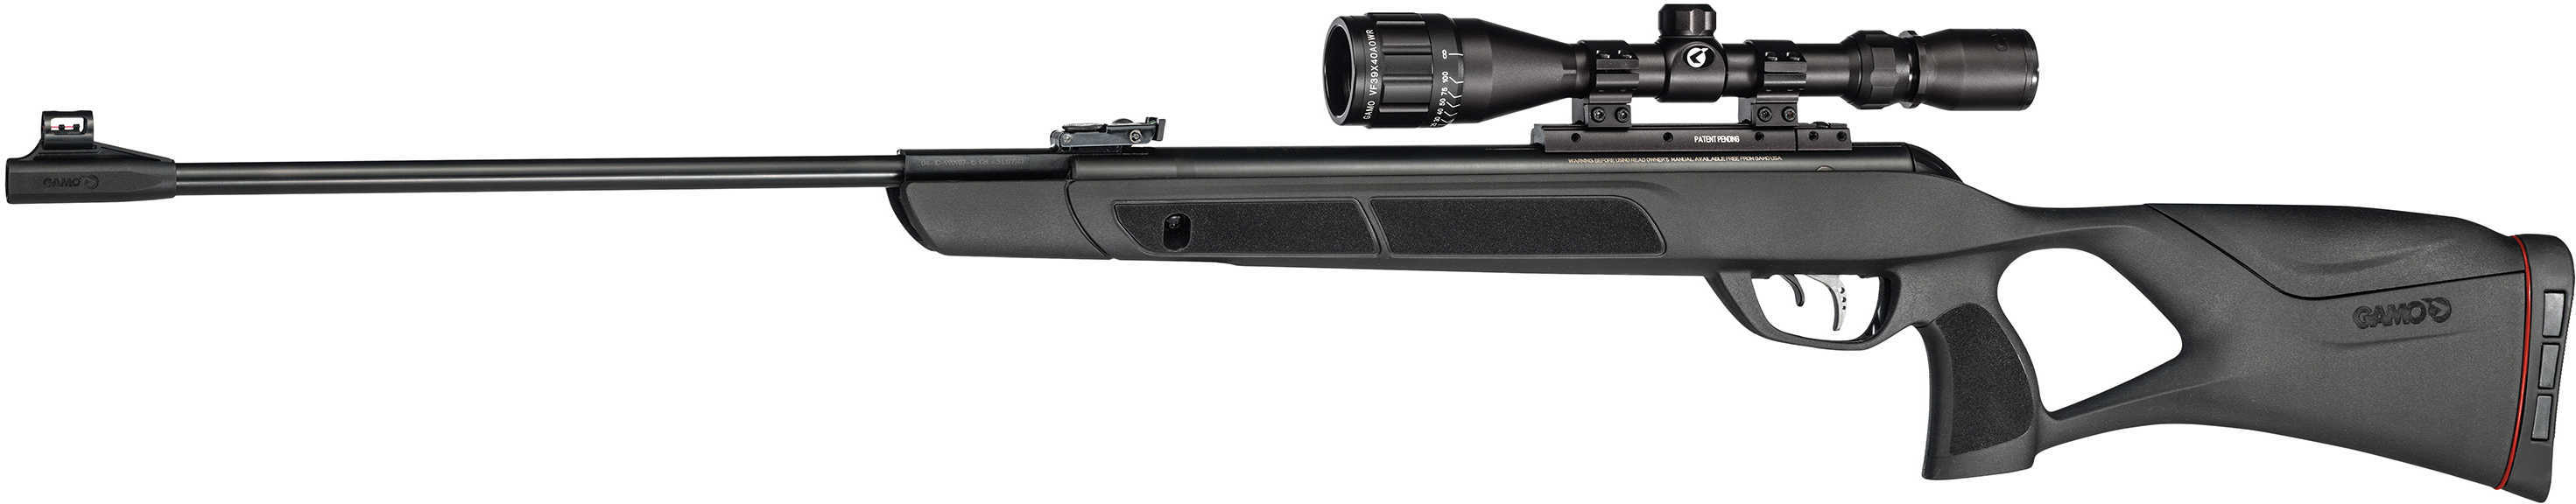 Gamo Magnum .177 Caliber, Single Shot, Break Barrel Action with 3-9x40mm Scope Md: 611006154